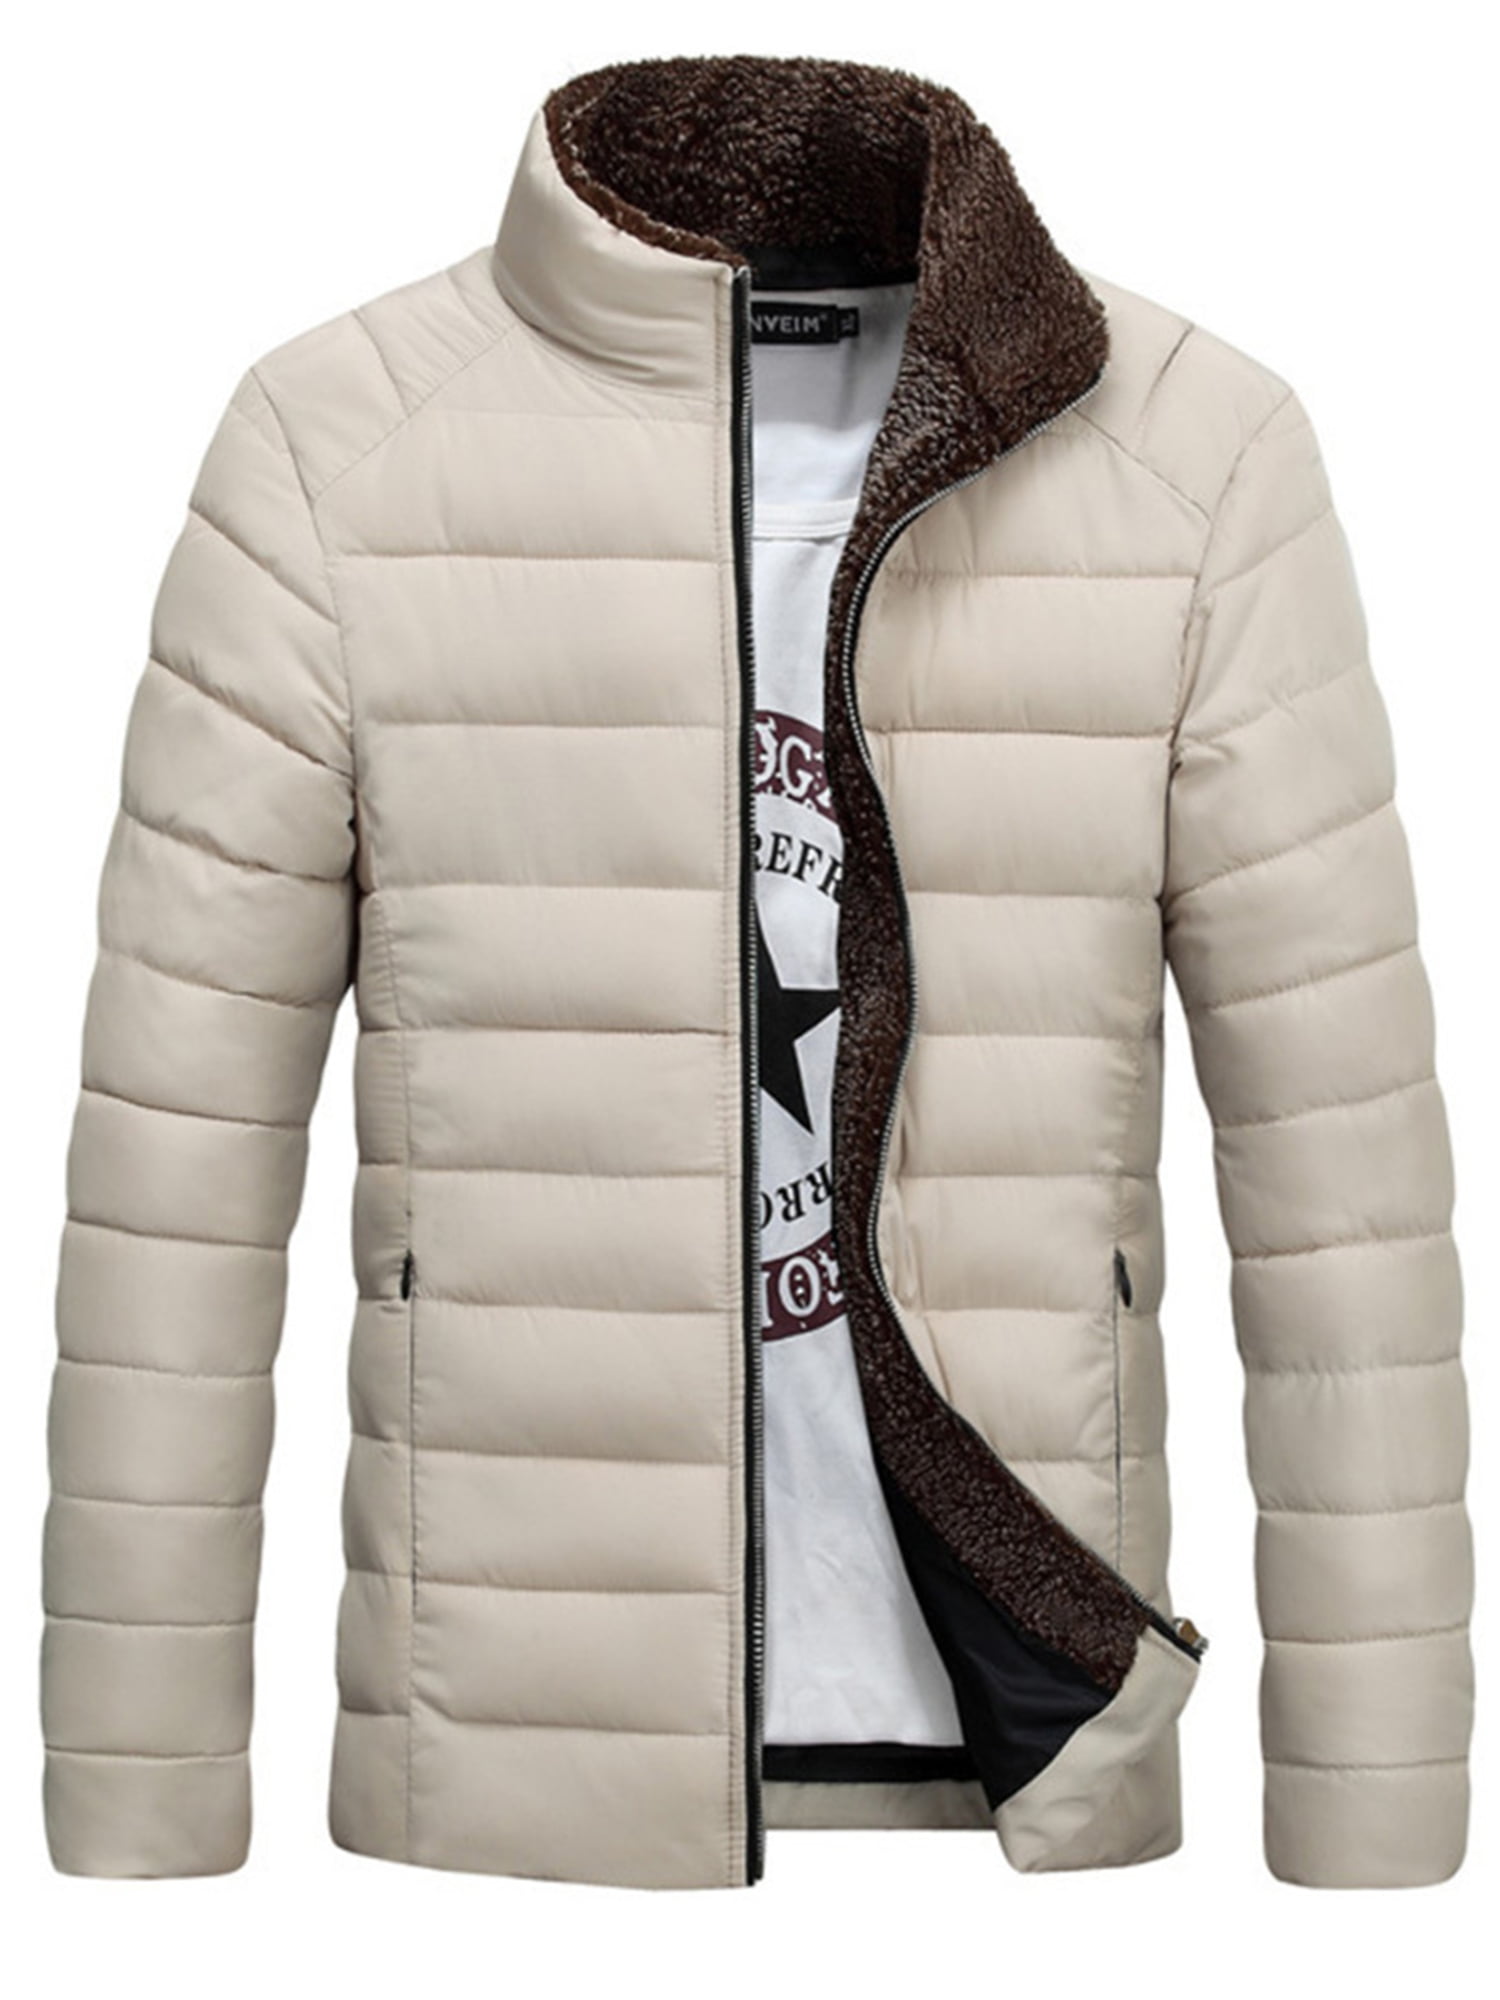 Mstyle Mens Casual Cotton Lapel Collar Warm Vogue Zip Up Winter Down Parka 